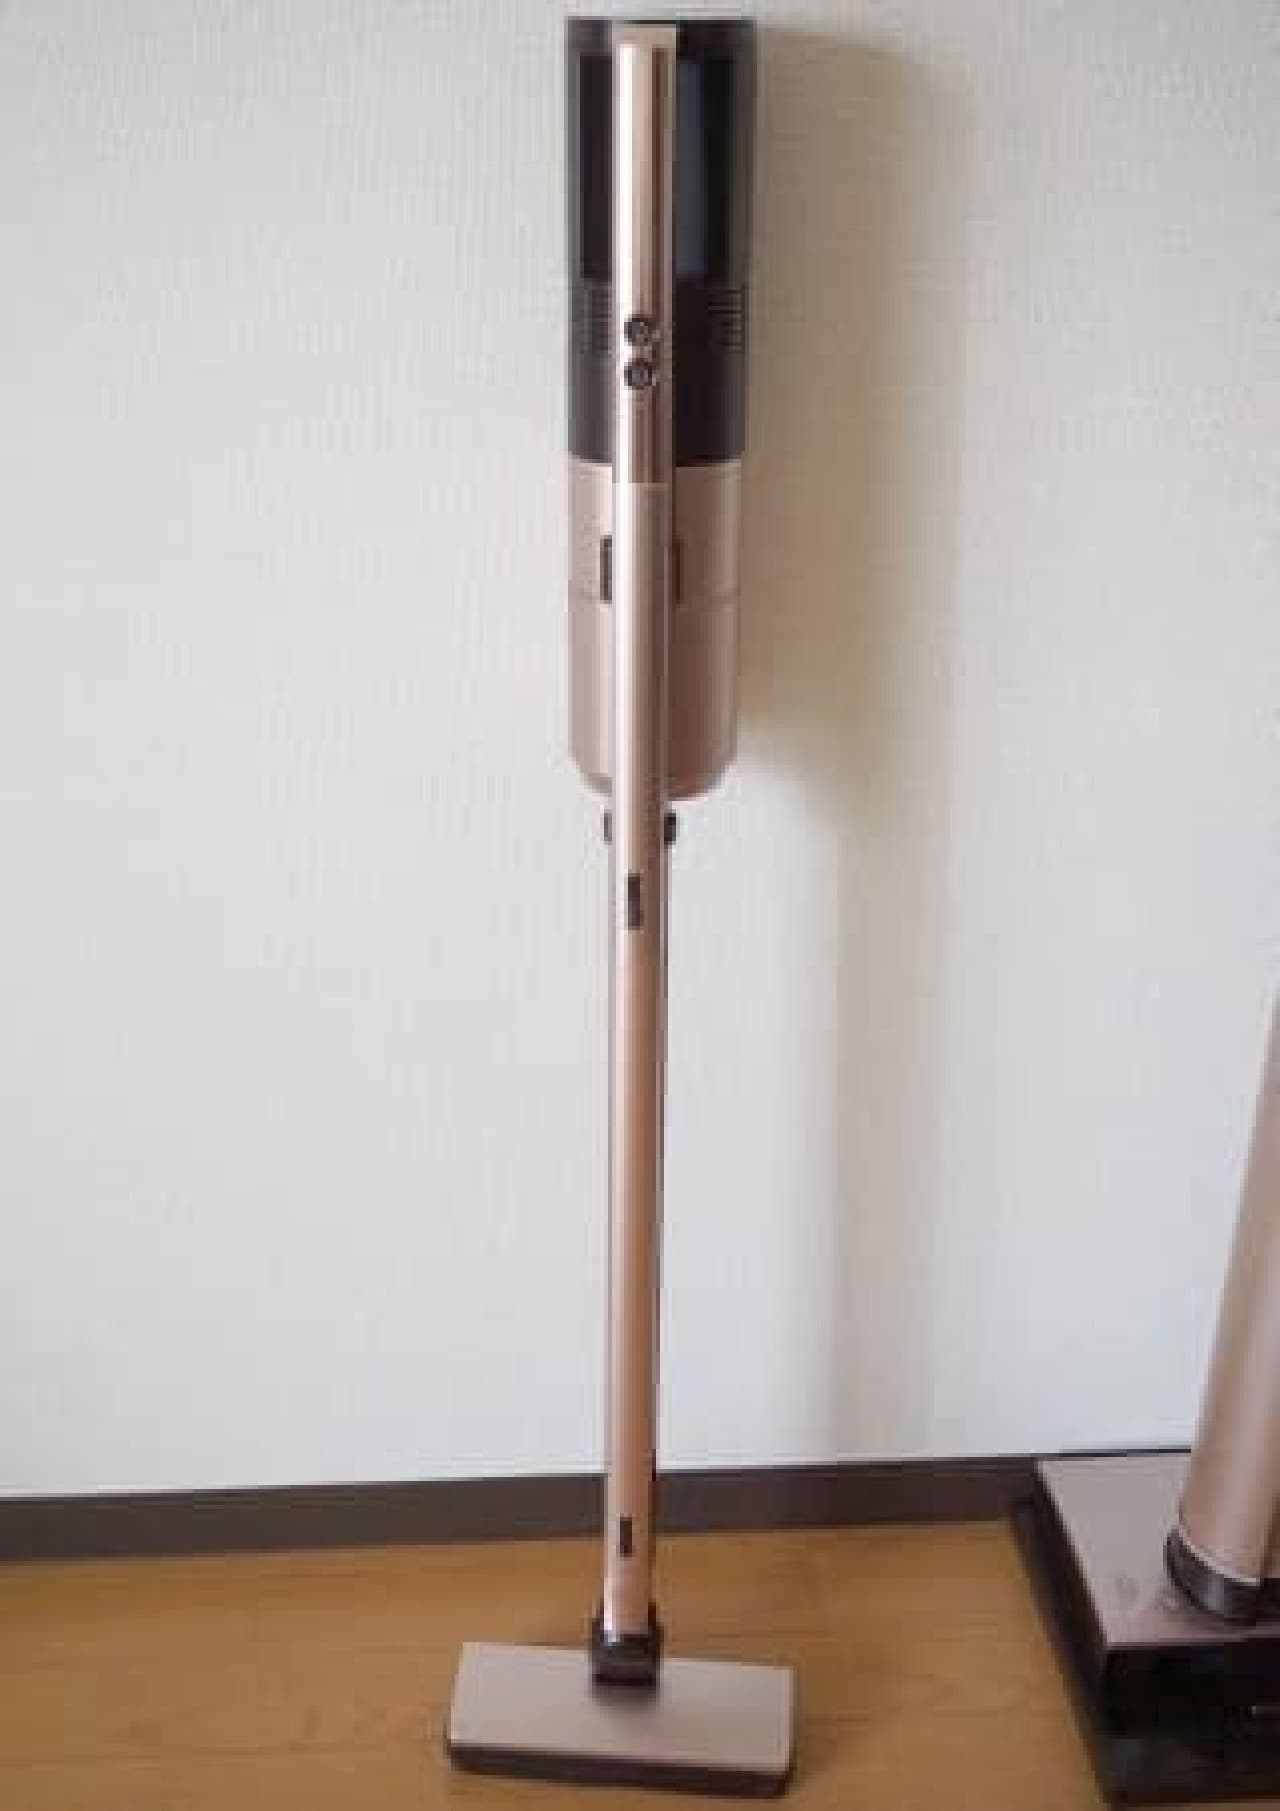 Mitsubishi Electric Cordless Stick Cleaner "iNSTICK"